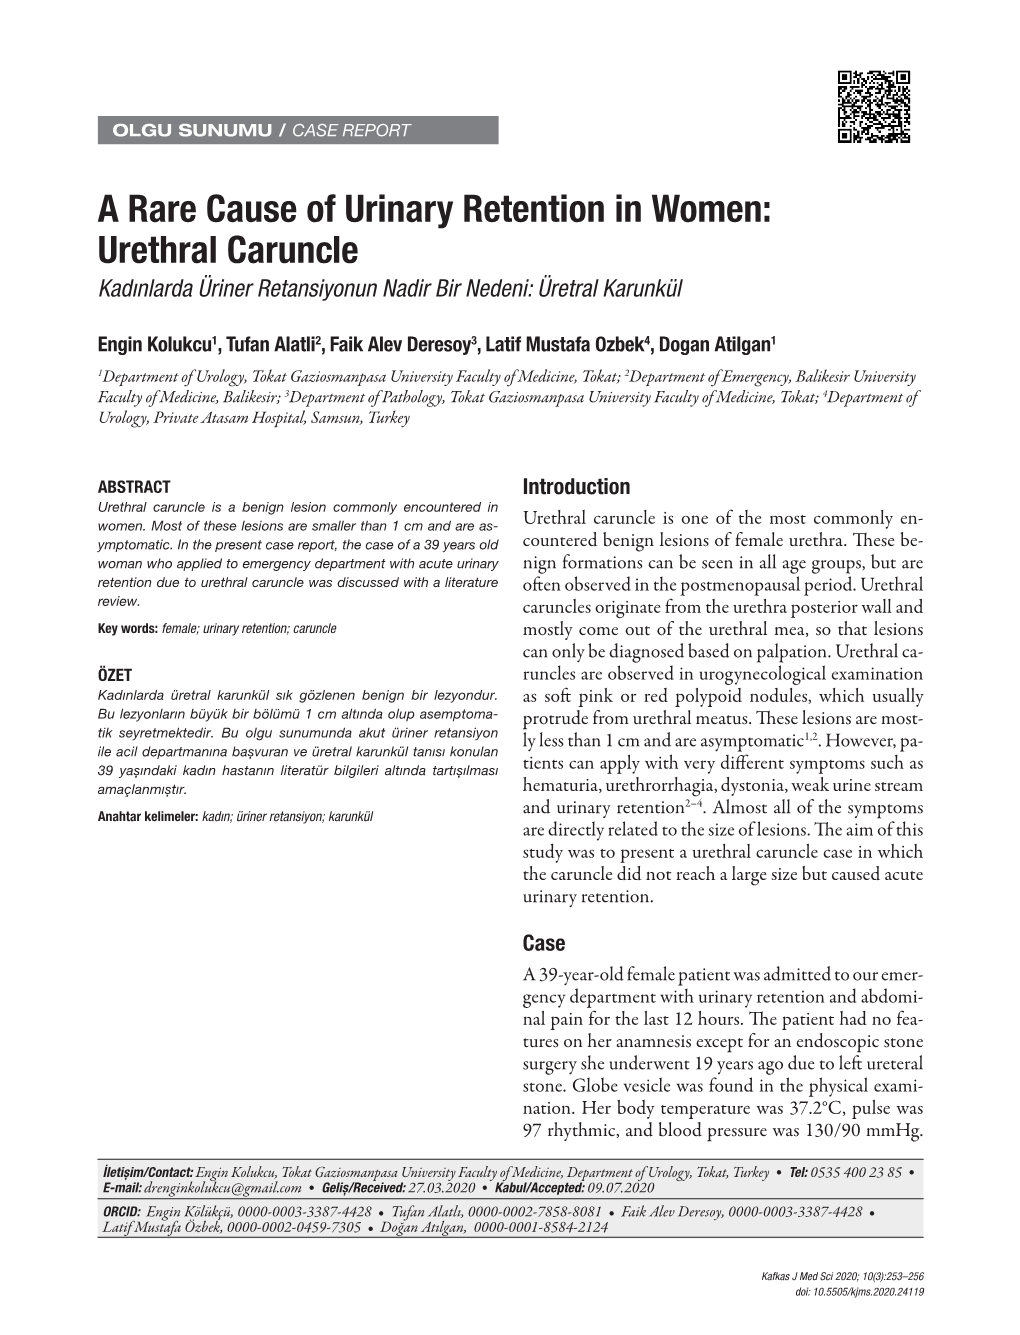 A Rare Cause of Urinary Retention in Women: Urethral Caruncle Kadınlarda Üriner Retansiyonun Nadir Bir Nedeni: Üretral Karunkül